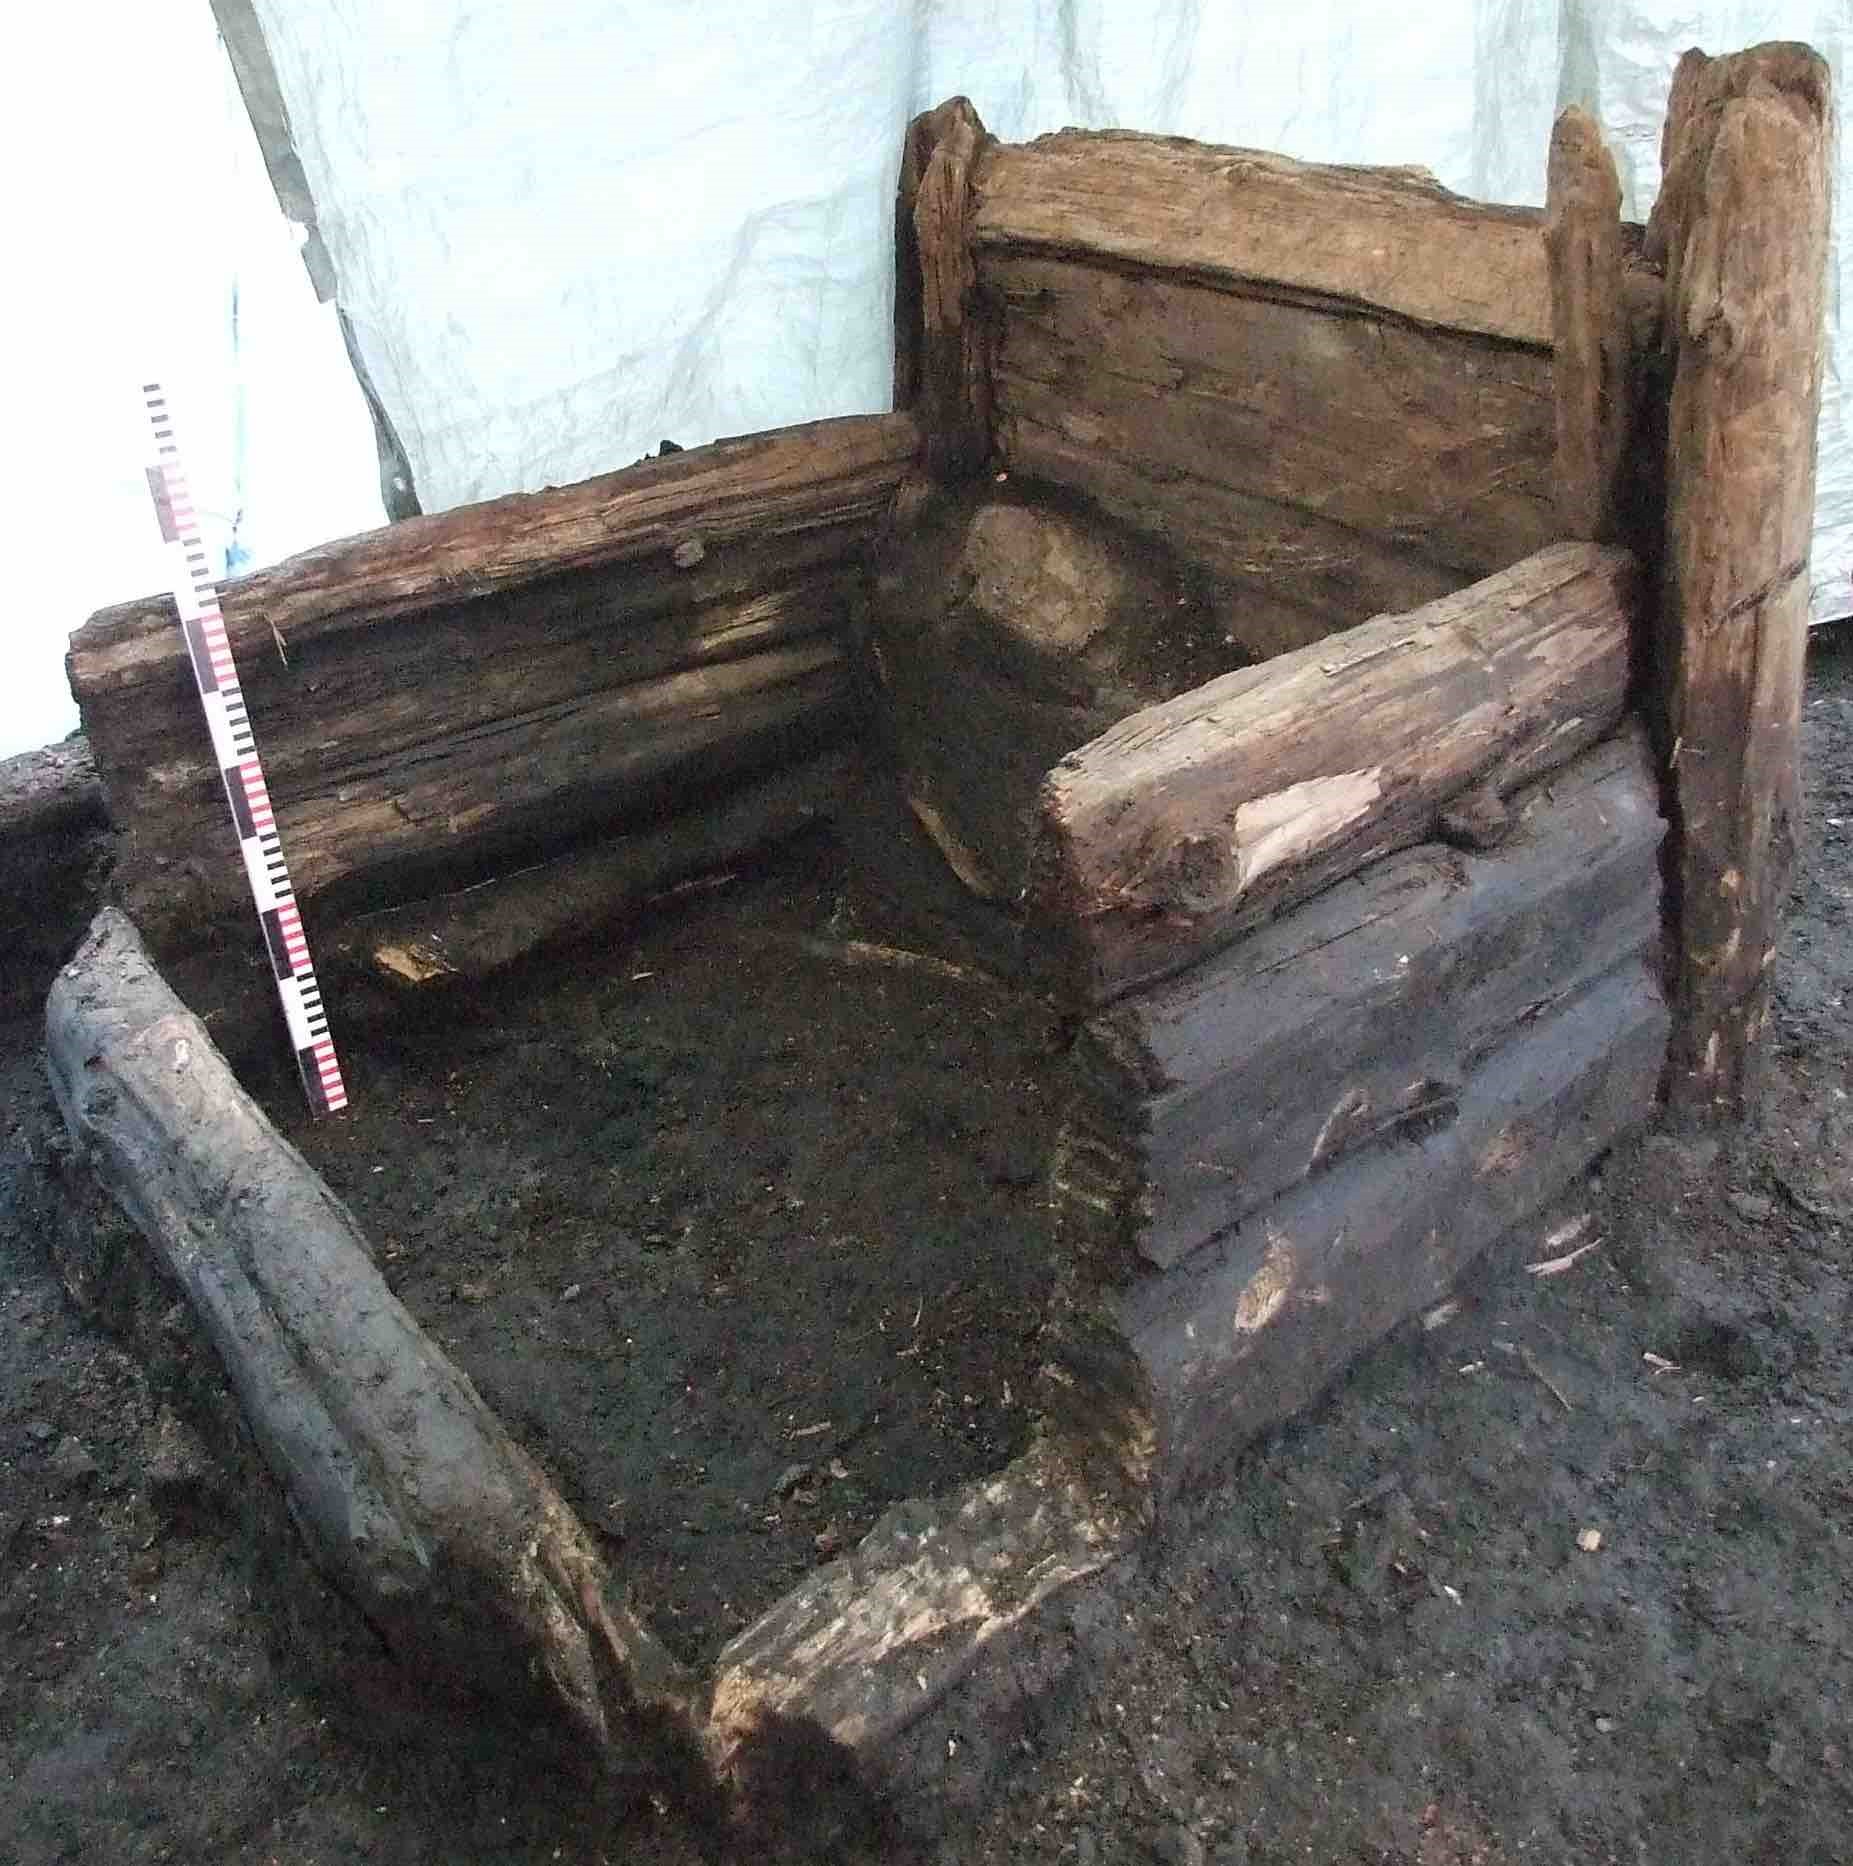 Wooden latrine from medieval Riga, Latvia